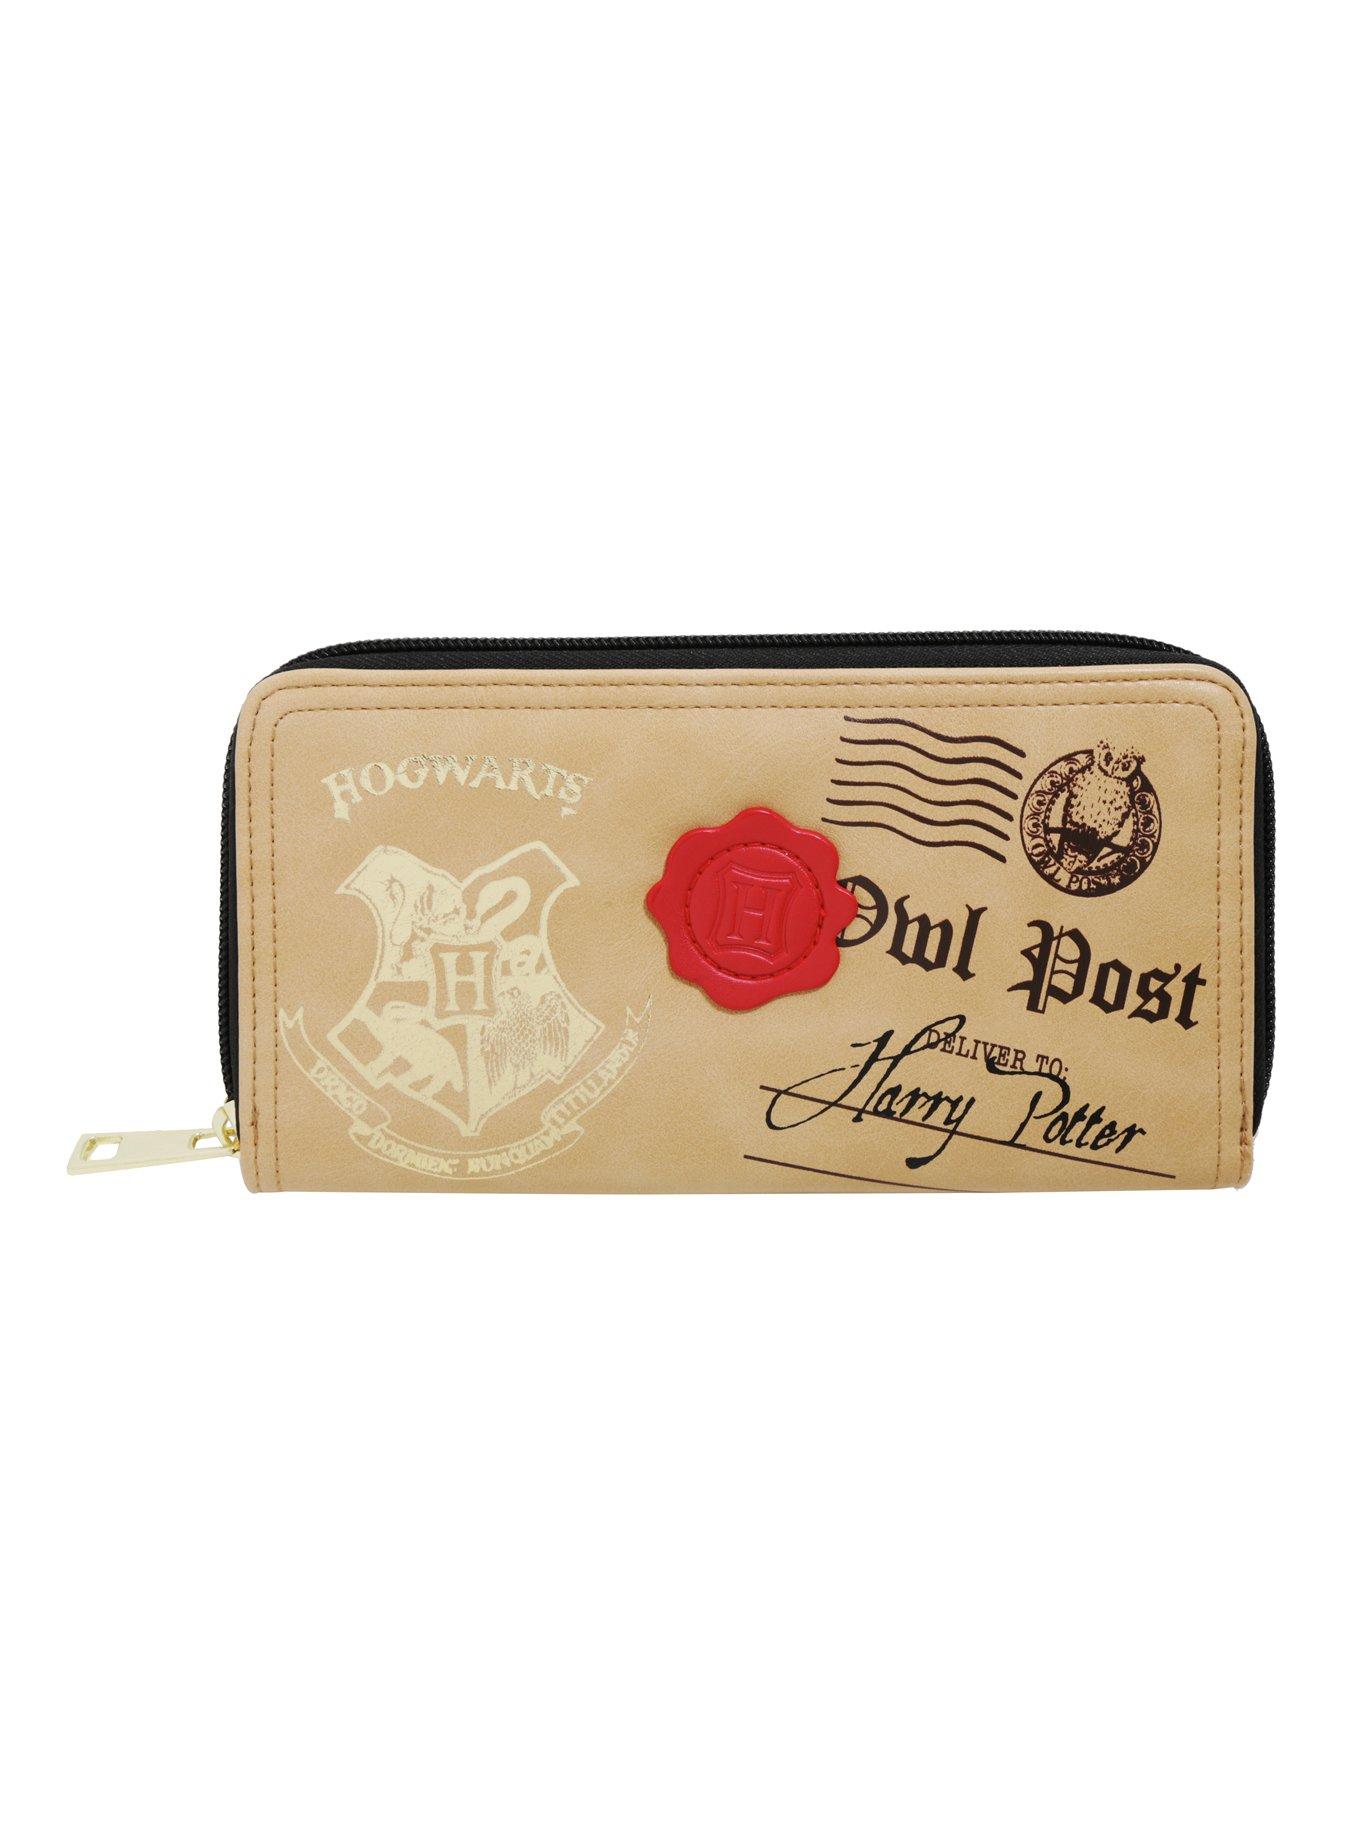 Harry Potter Owl Post Zipper Wallet | Hot Topic